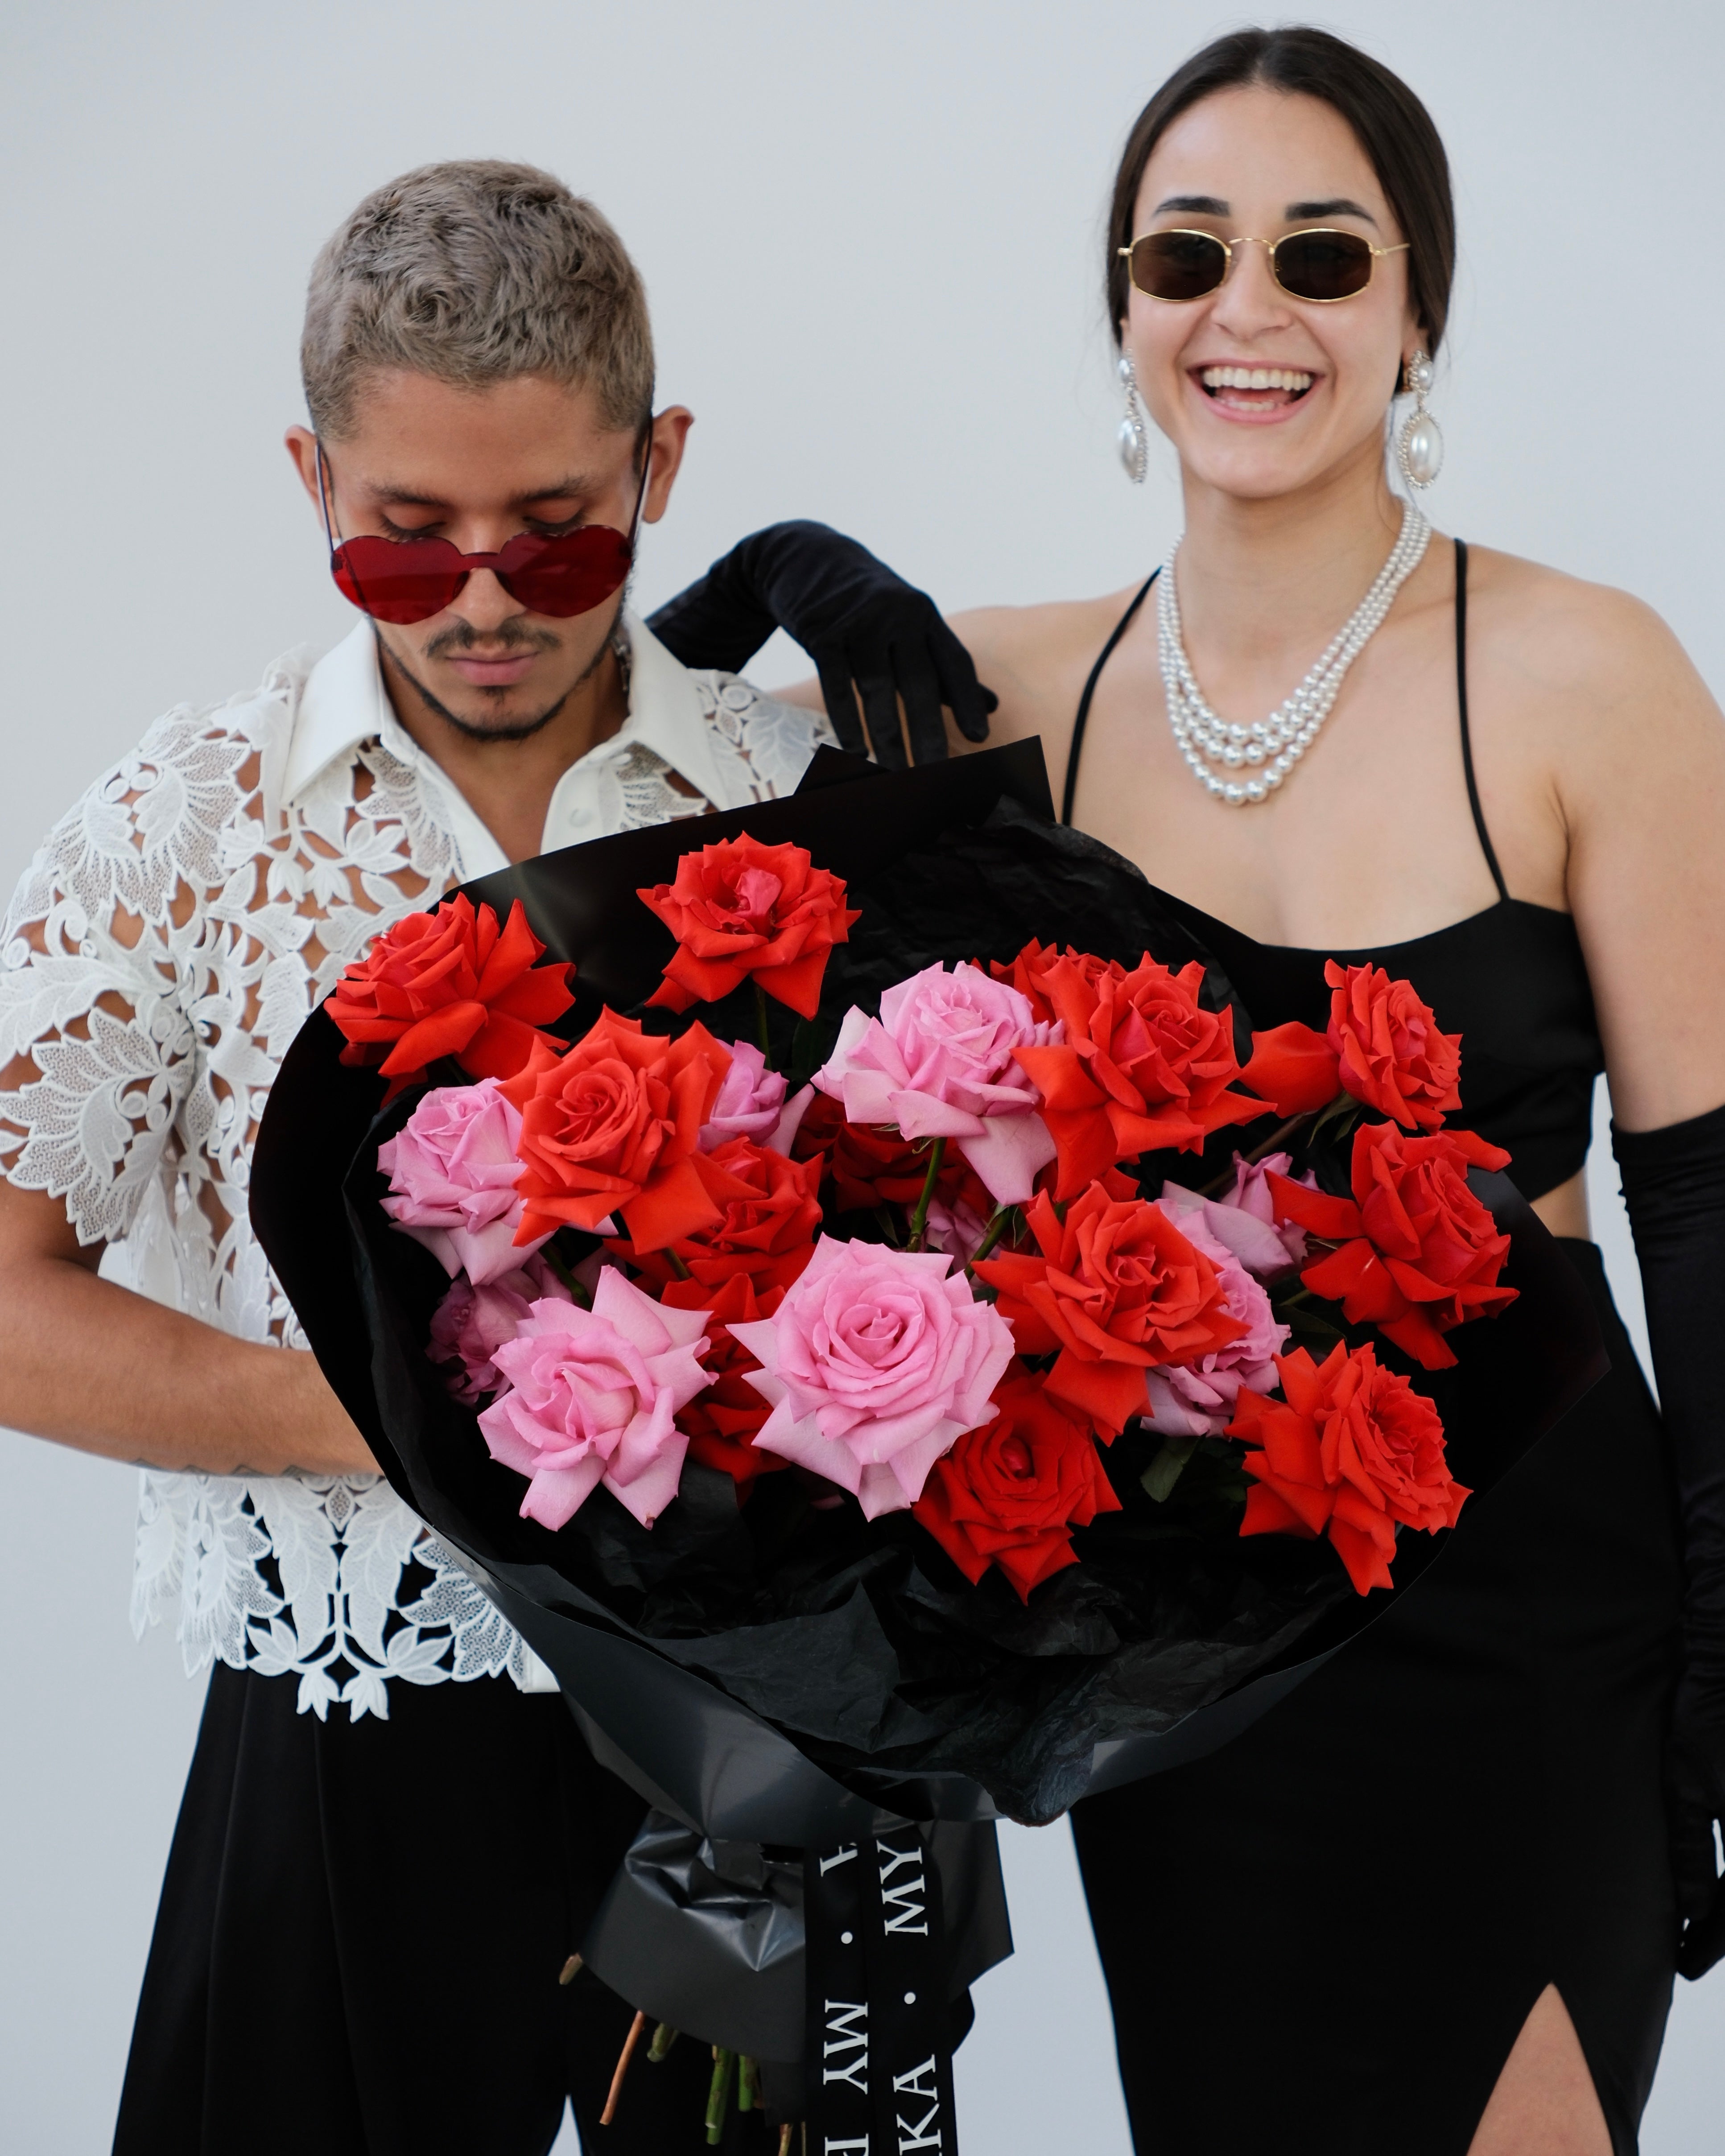 Bouquet “Sexy red” - 2 dozen roses